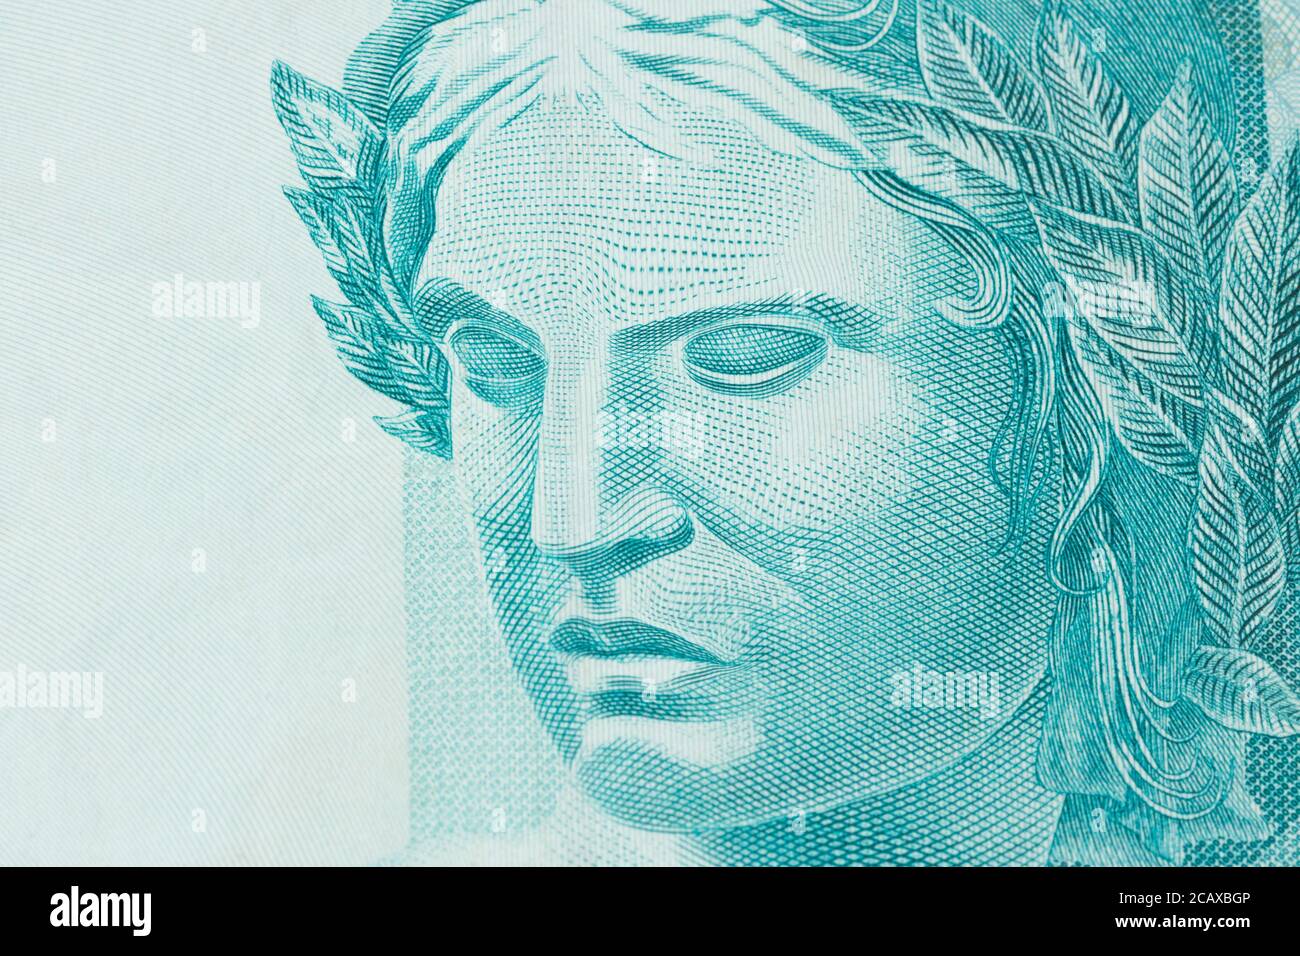 Republic's Effigy portrayed as a bust on Brazilian money. Super macro closeup on one hundred bill. Stock Photo